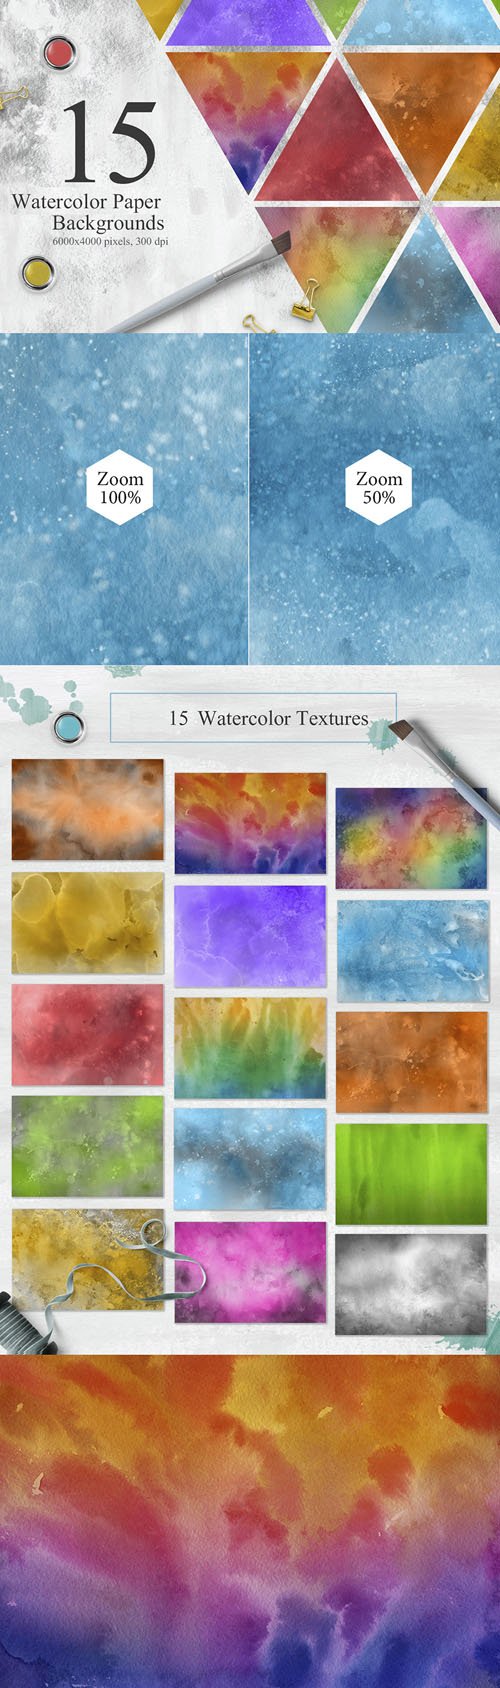 15 Watercolor Textures Backgrounds